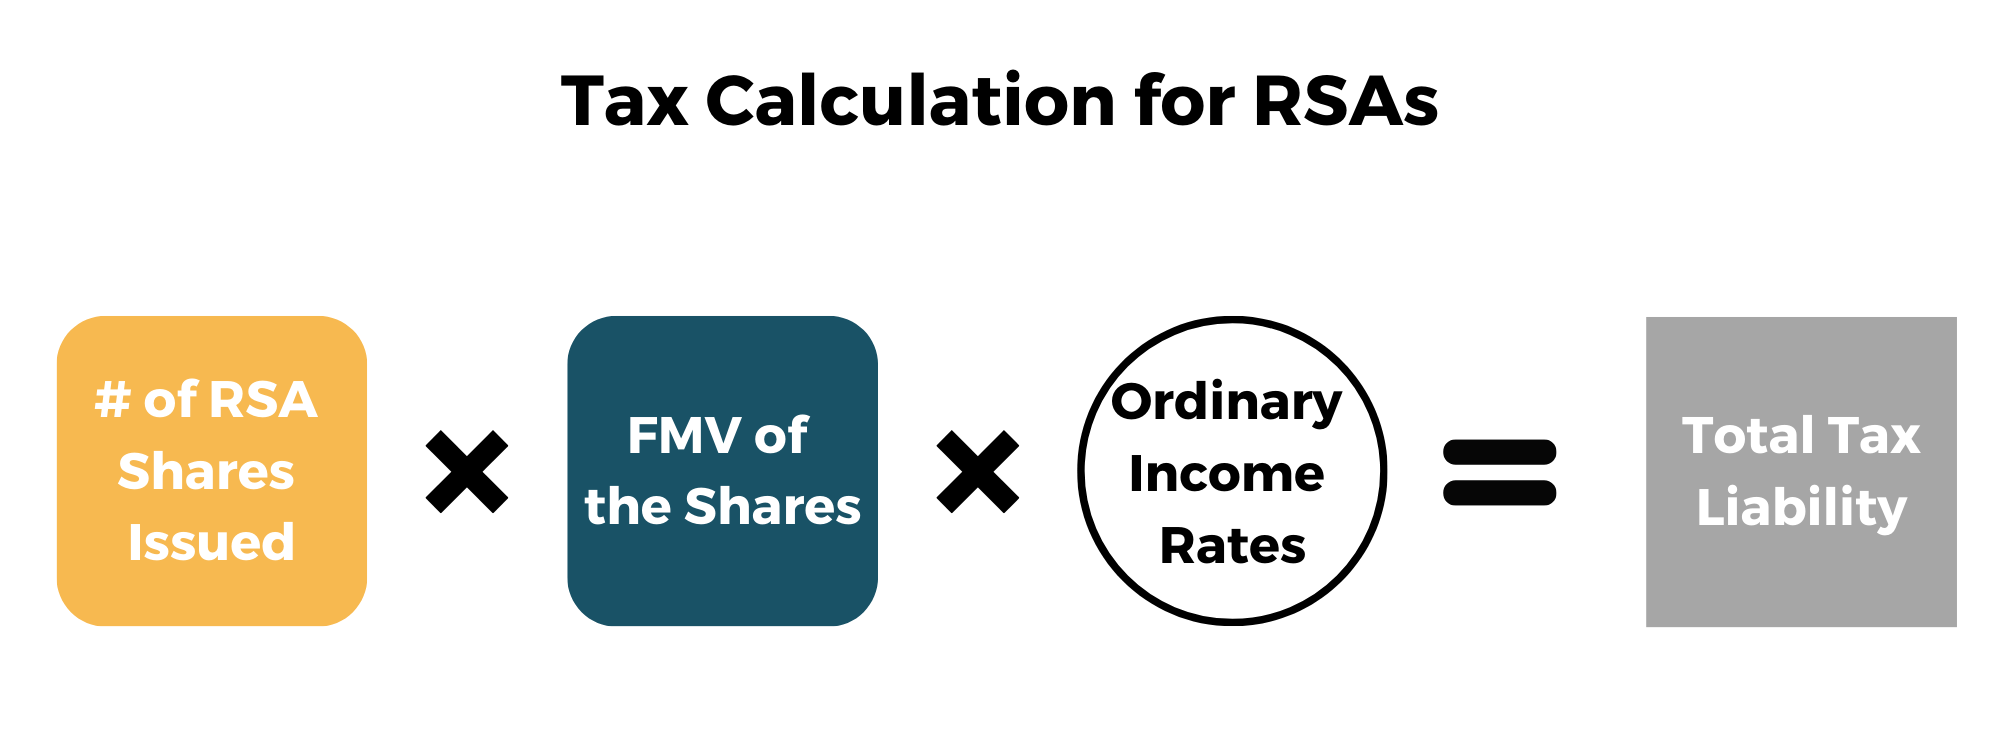 Tax calculation for RSAs